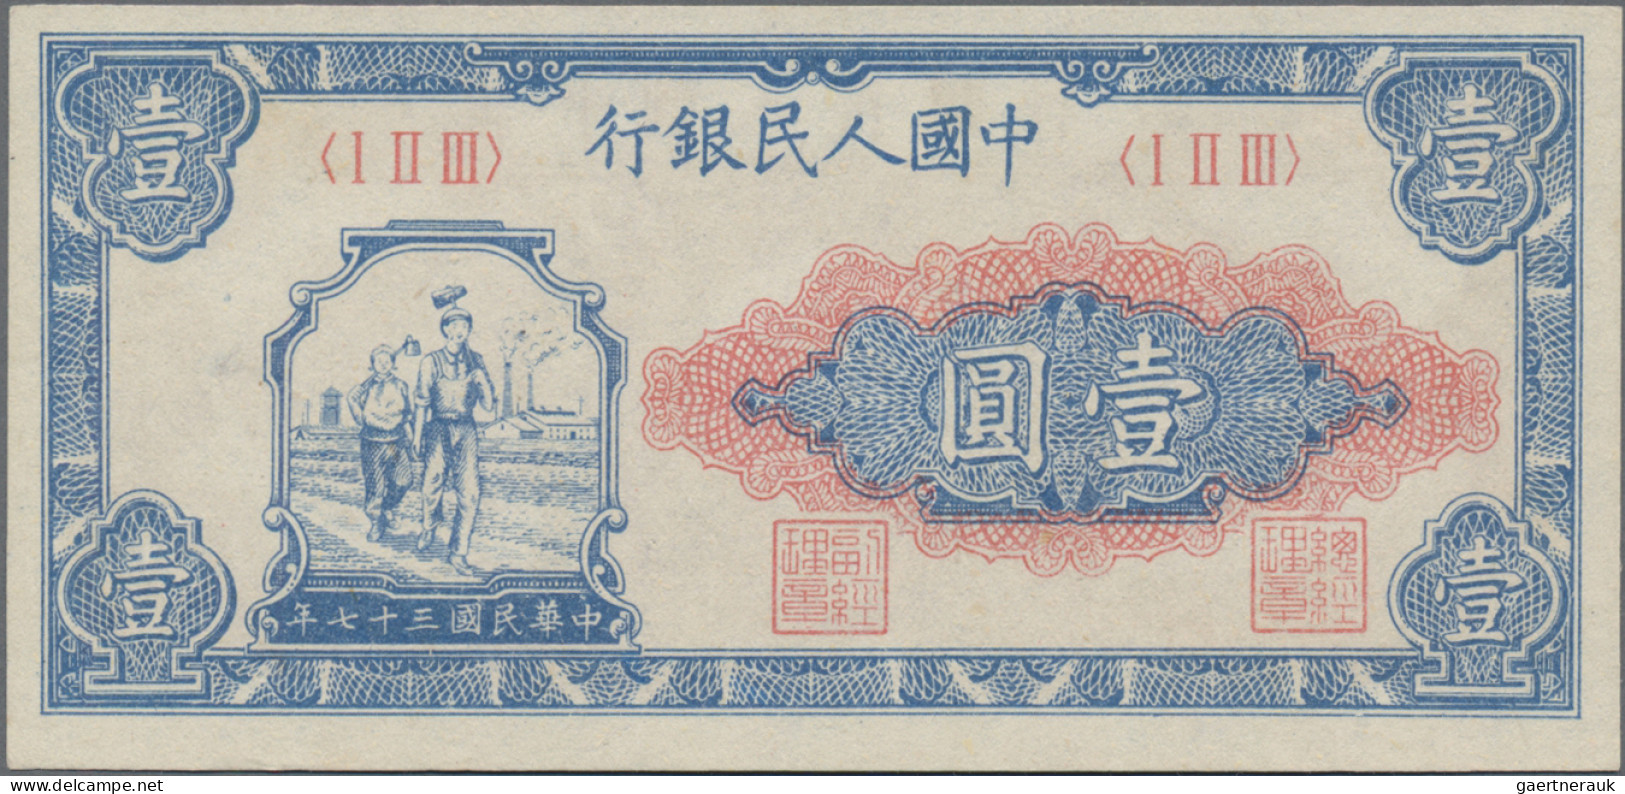 China: Peoples Bank Of China, First Series Renminbi 1948, 1 Yuan, P.800, Waterma - China